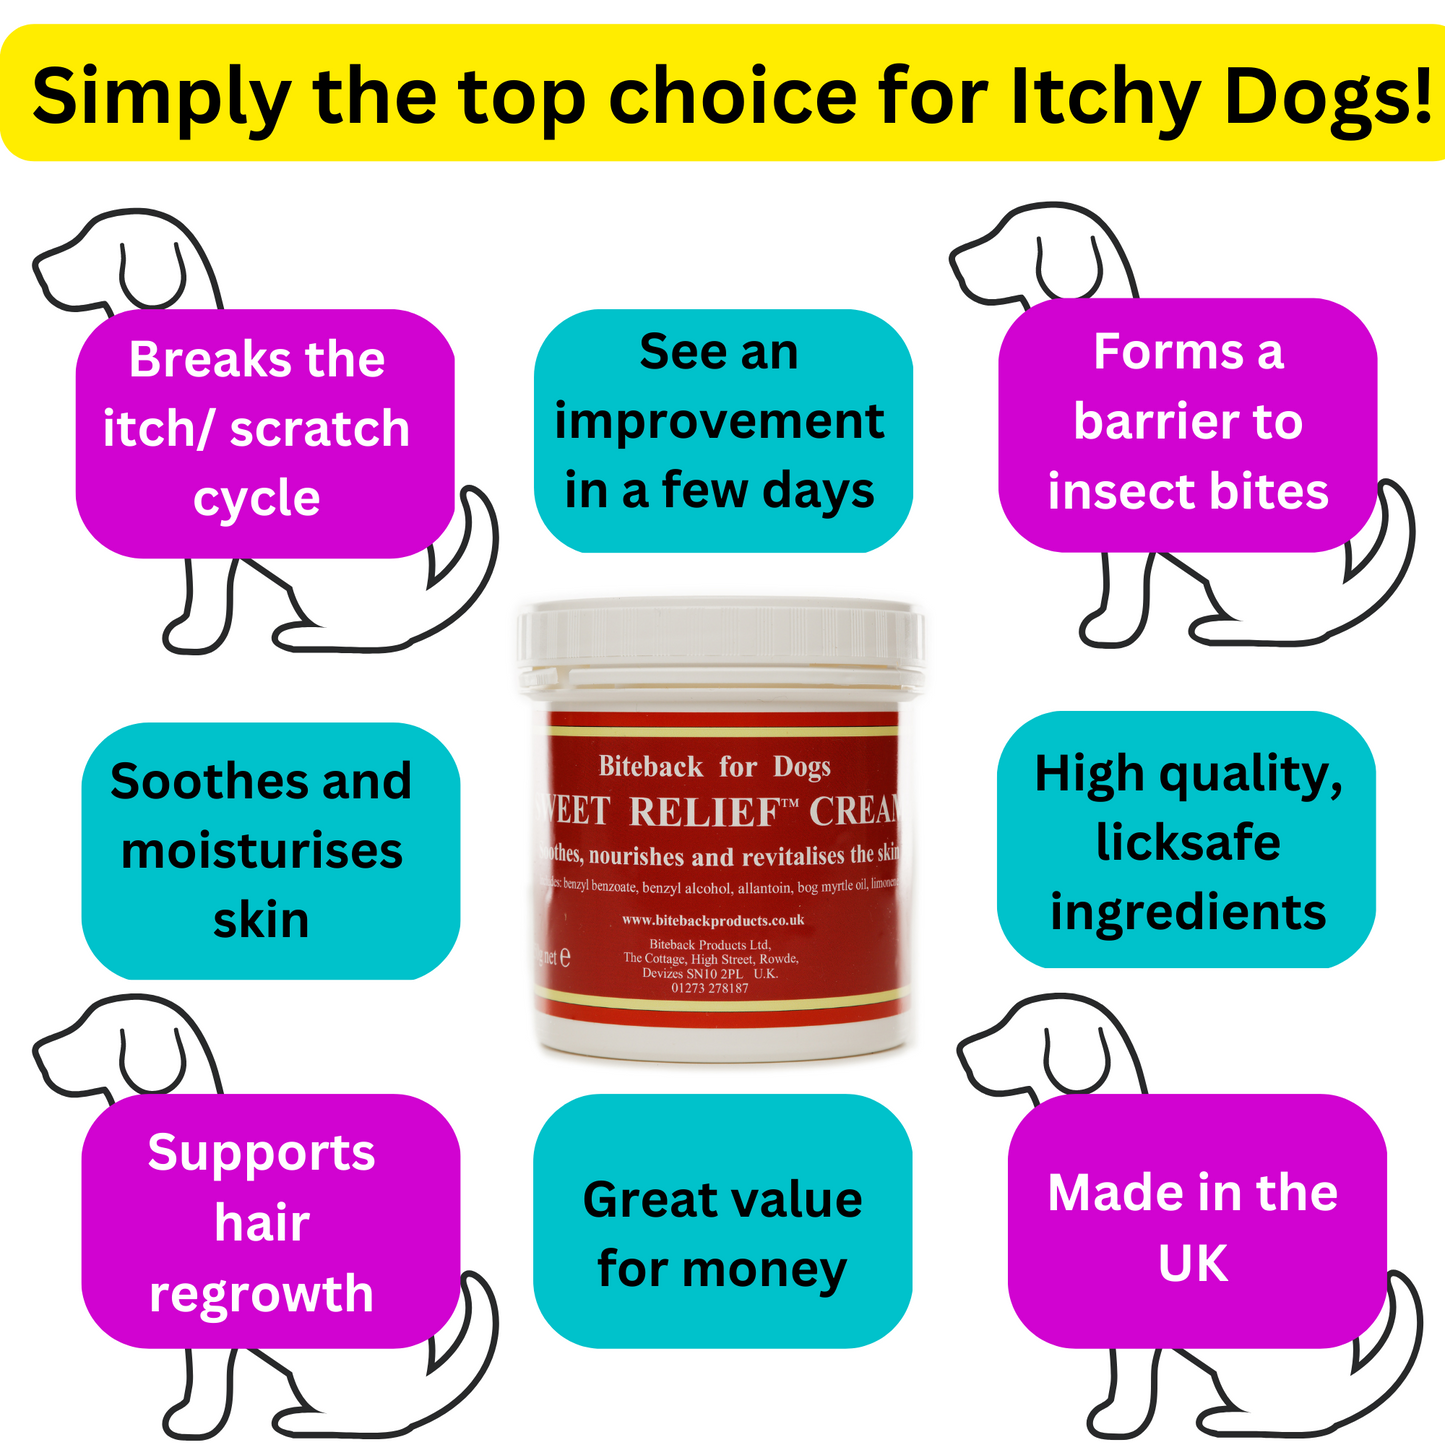 Itchy dog skin cream has many benefits